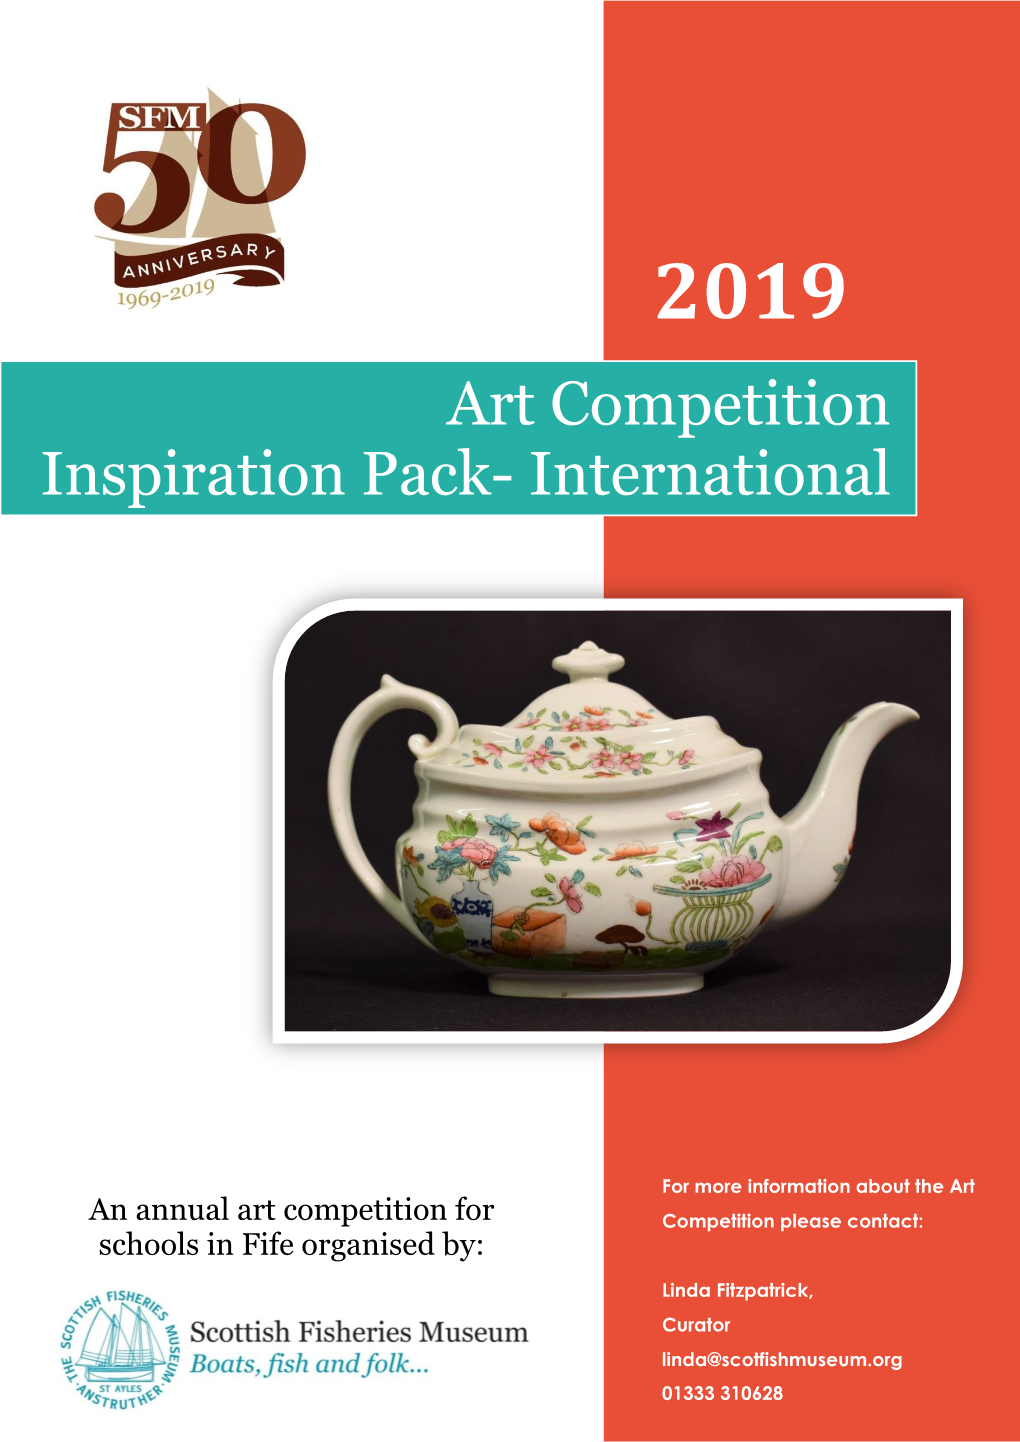 Art Competition Inspiration Pack- International